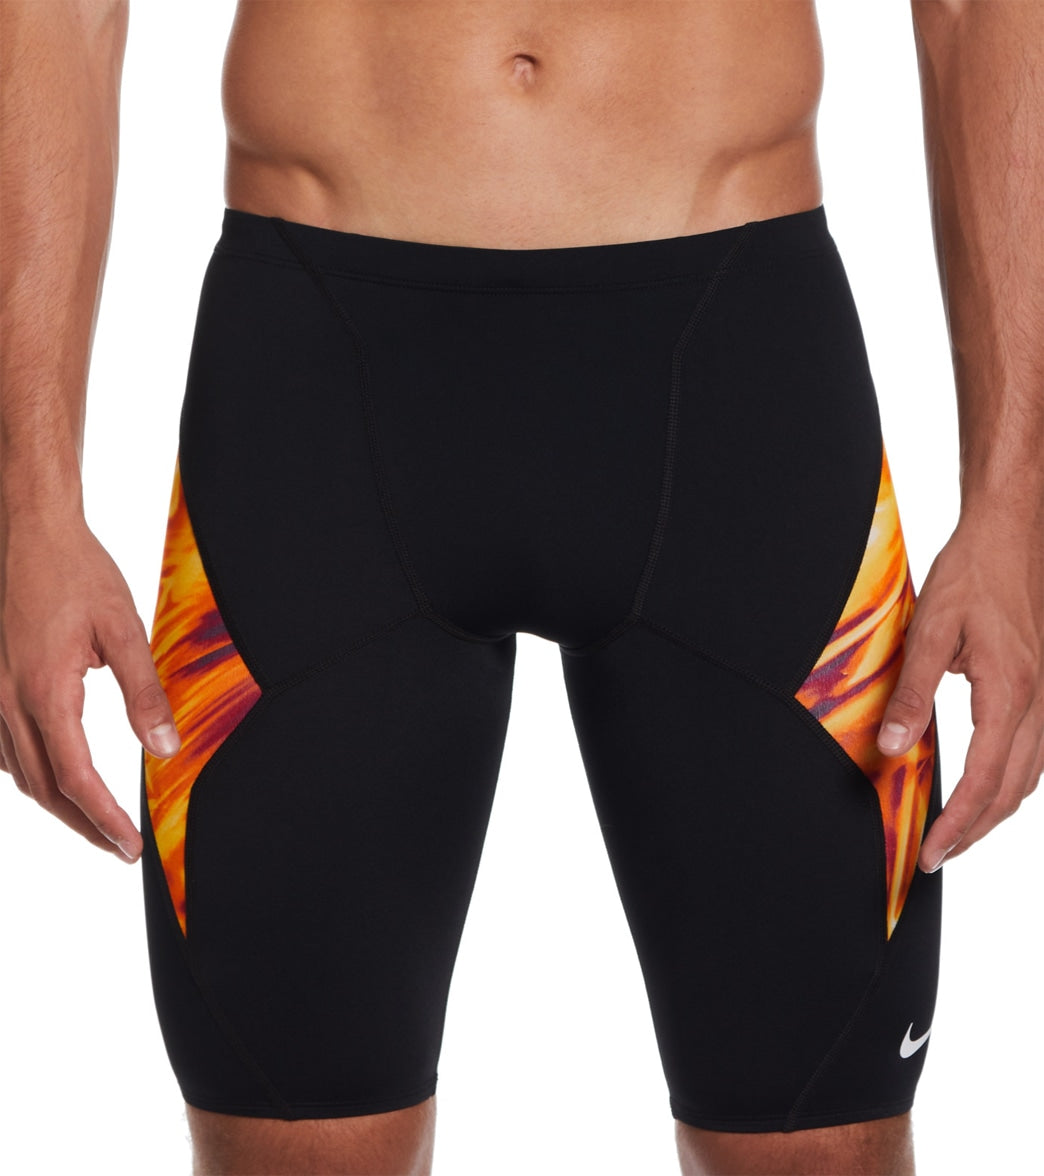 Nike Men's Solar Rise Jammer Swimsuit at SwimOutlet.com